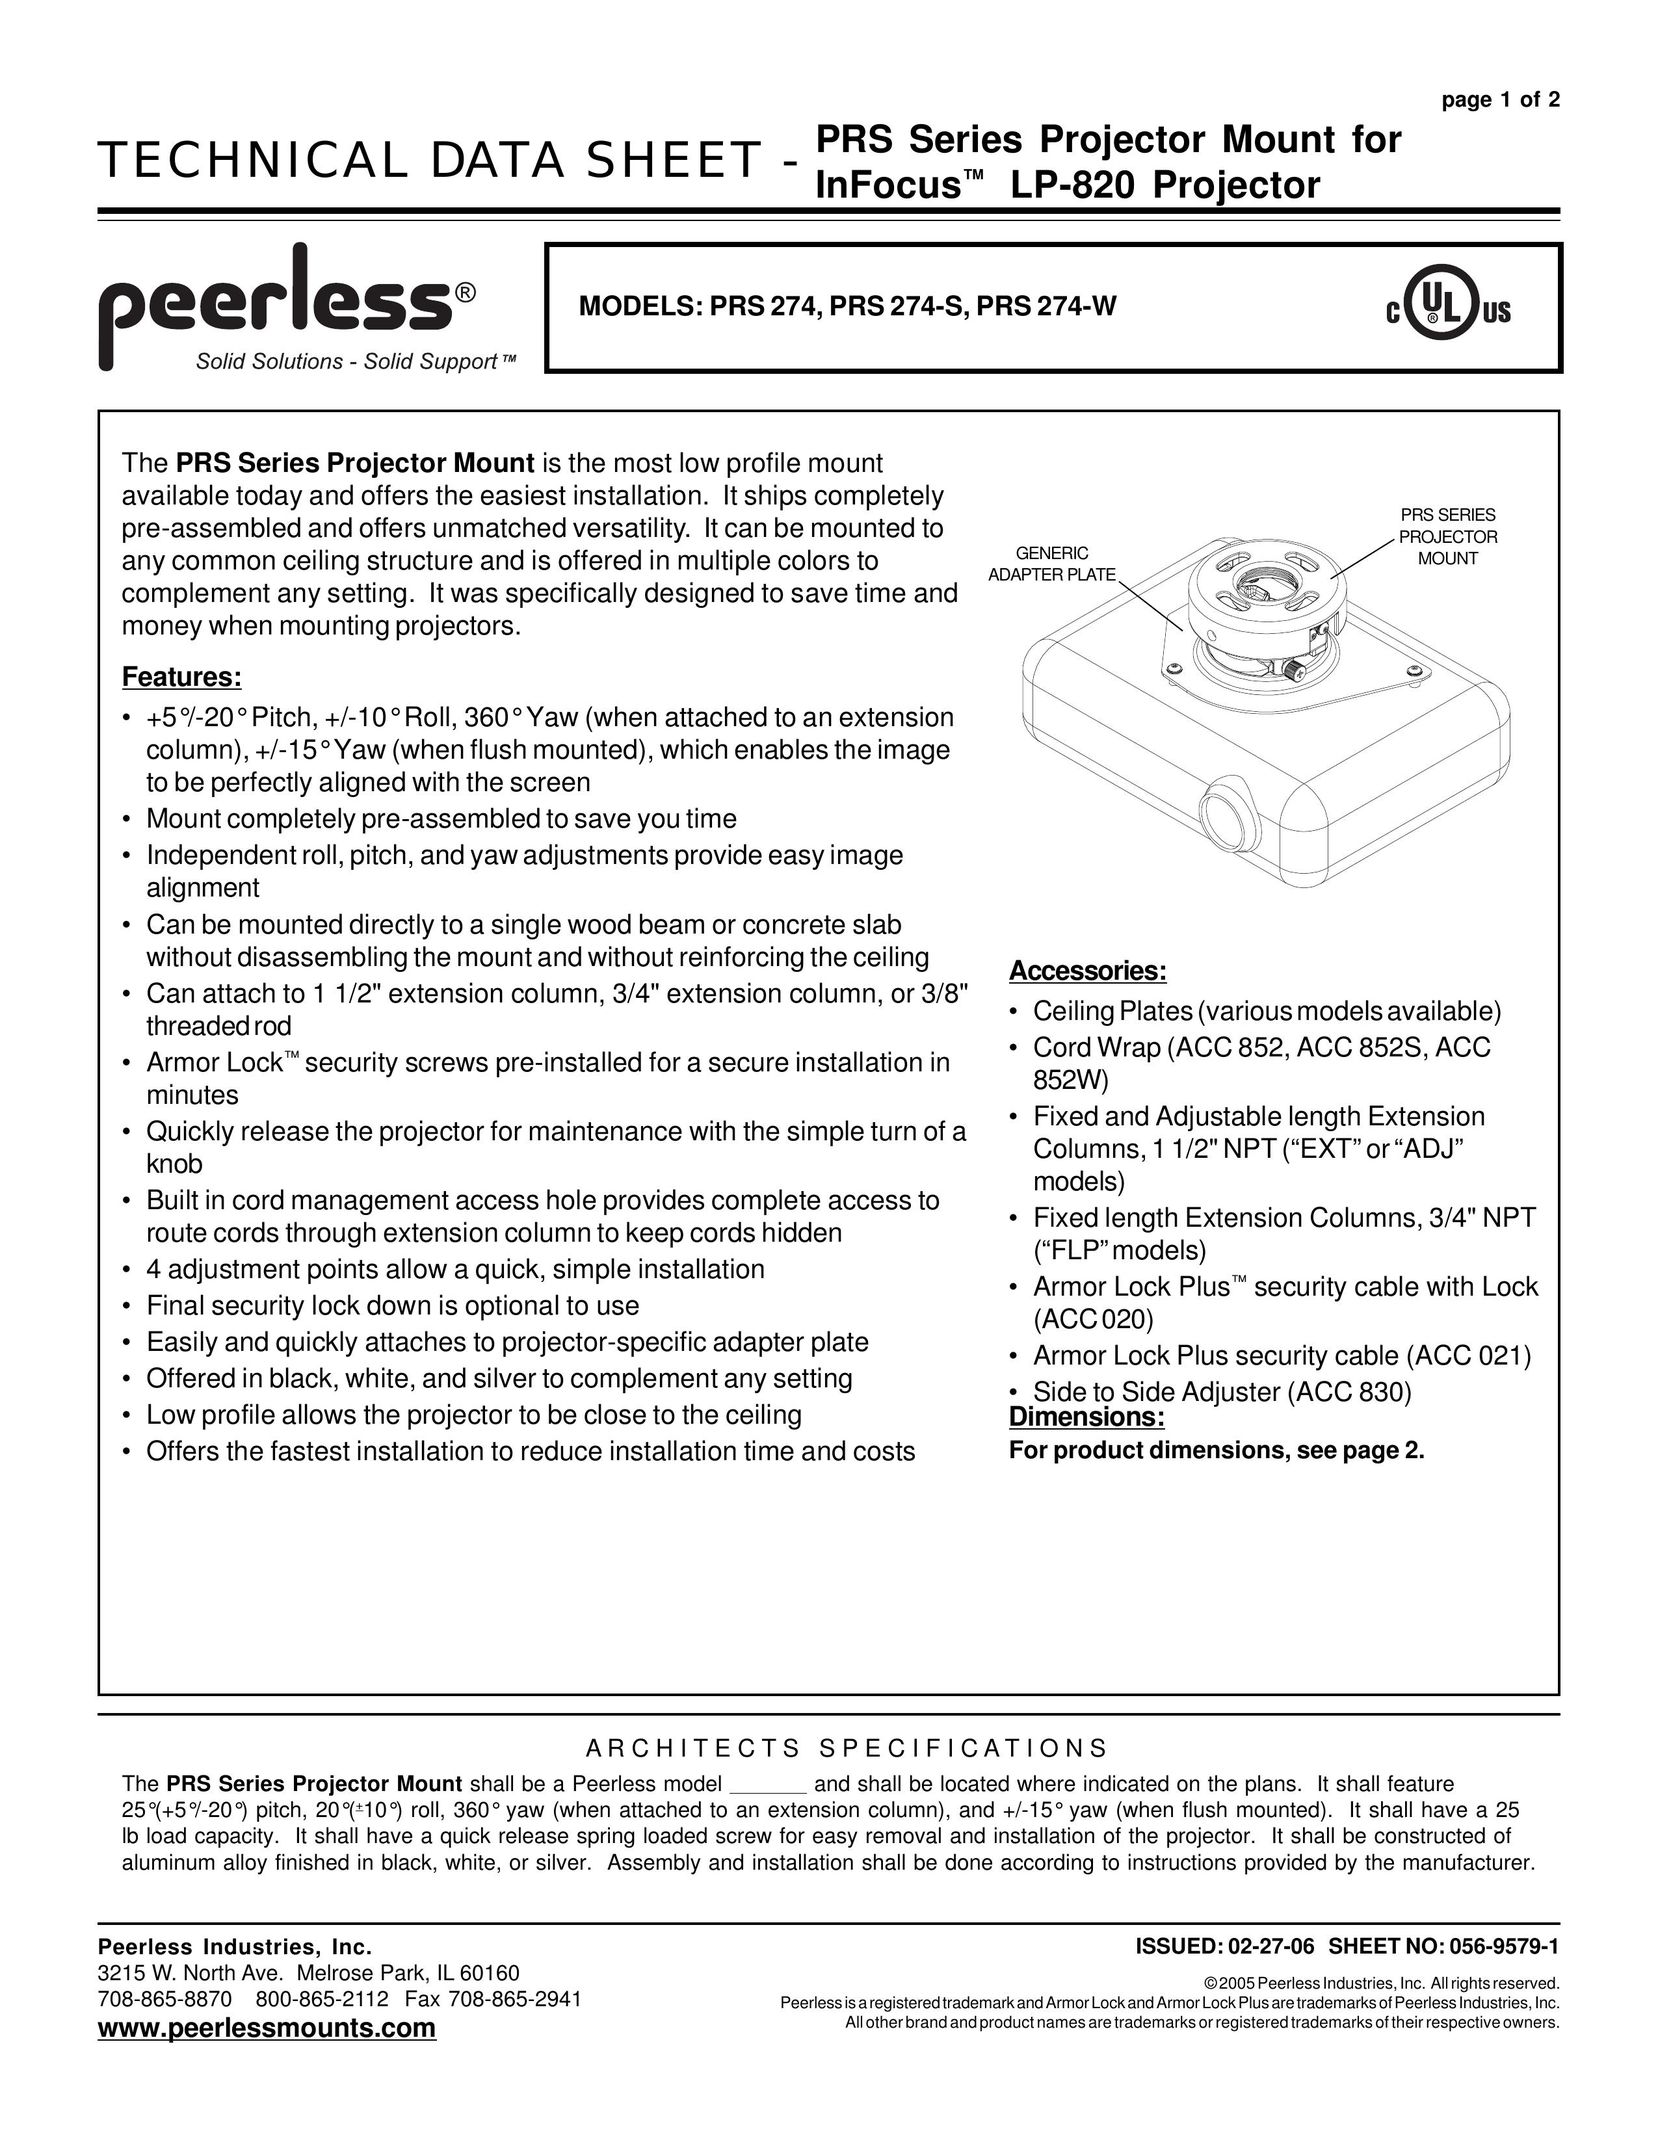 Peerless Industries PRS 274-W Projector Accessories User Manual